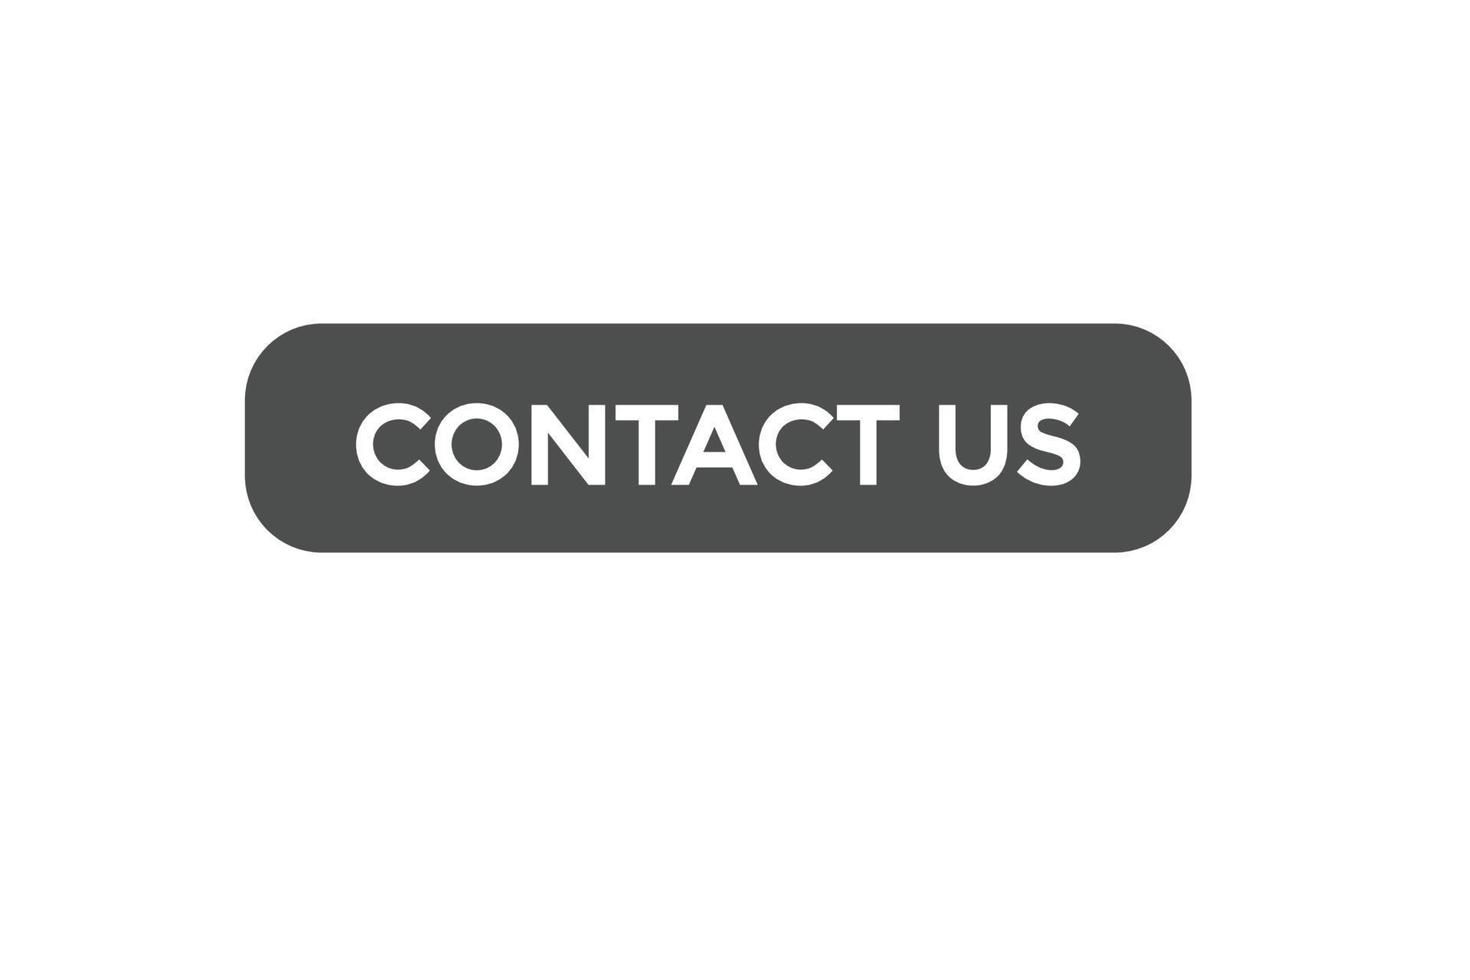 contact us button vectors.sign label speech bubble contact us vector